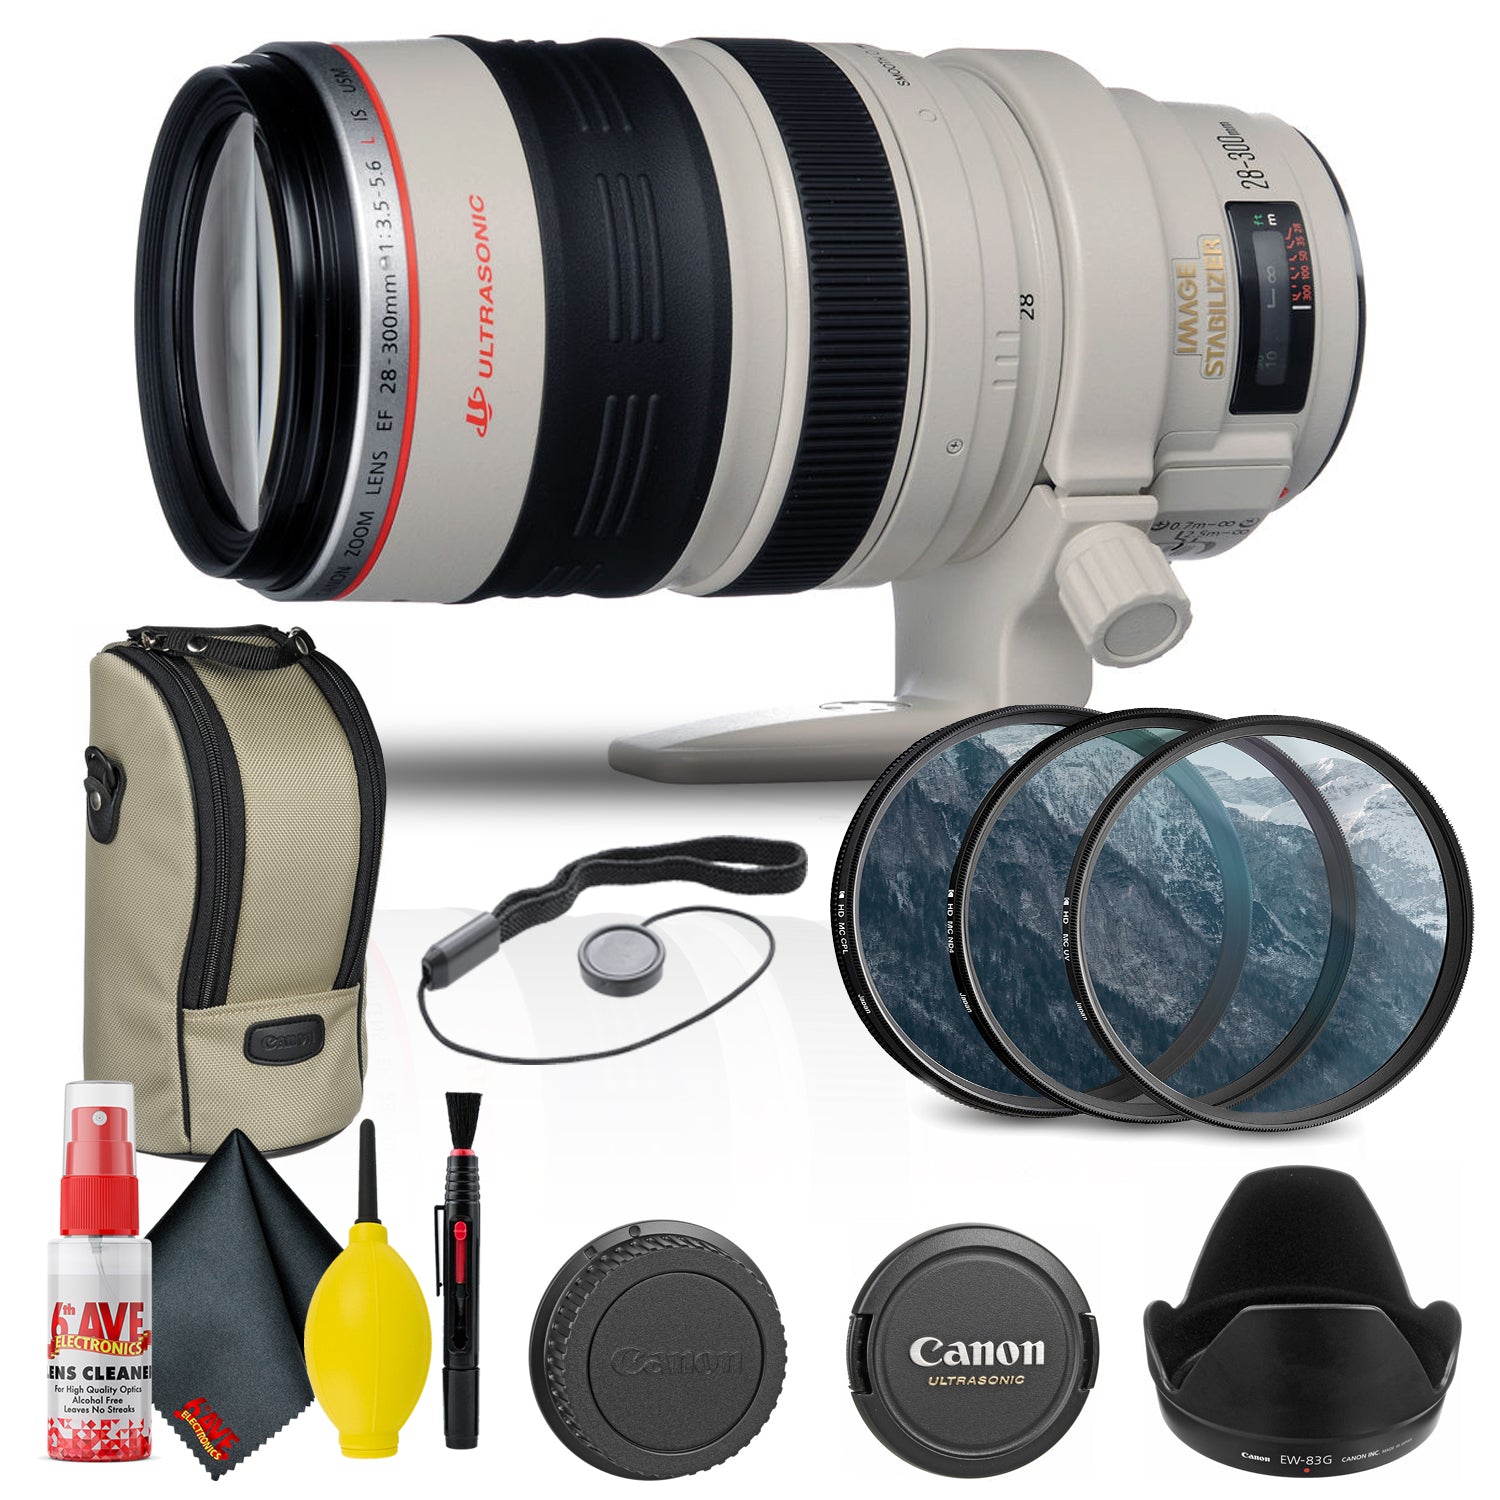 Canon EF 28-300mm f/3.5-5.6L IS USM Lens (9322A002) + Filter Kit + Accessory Bundle